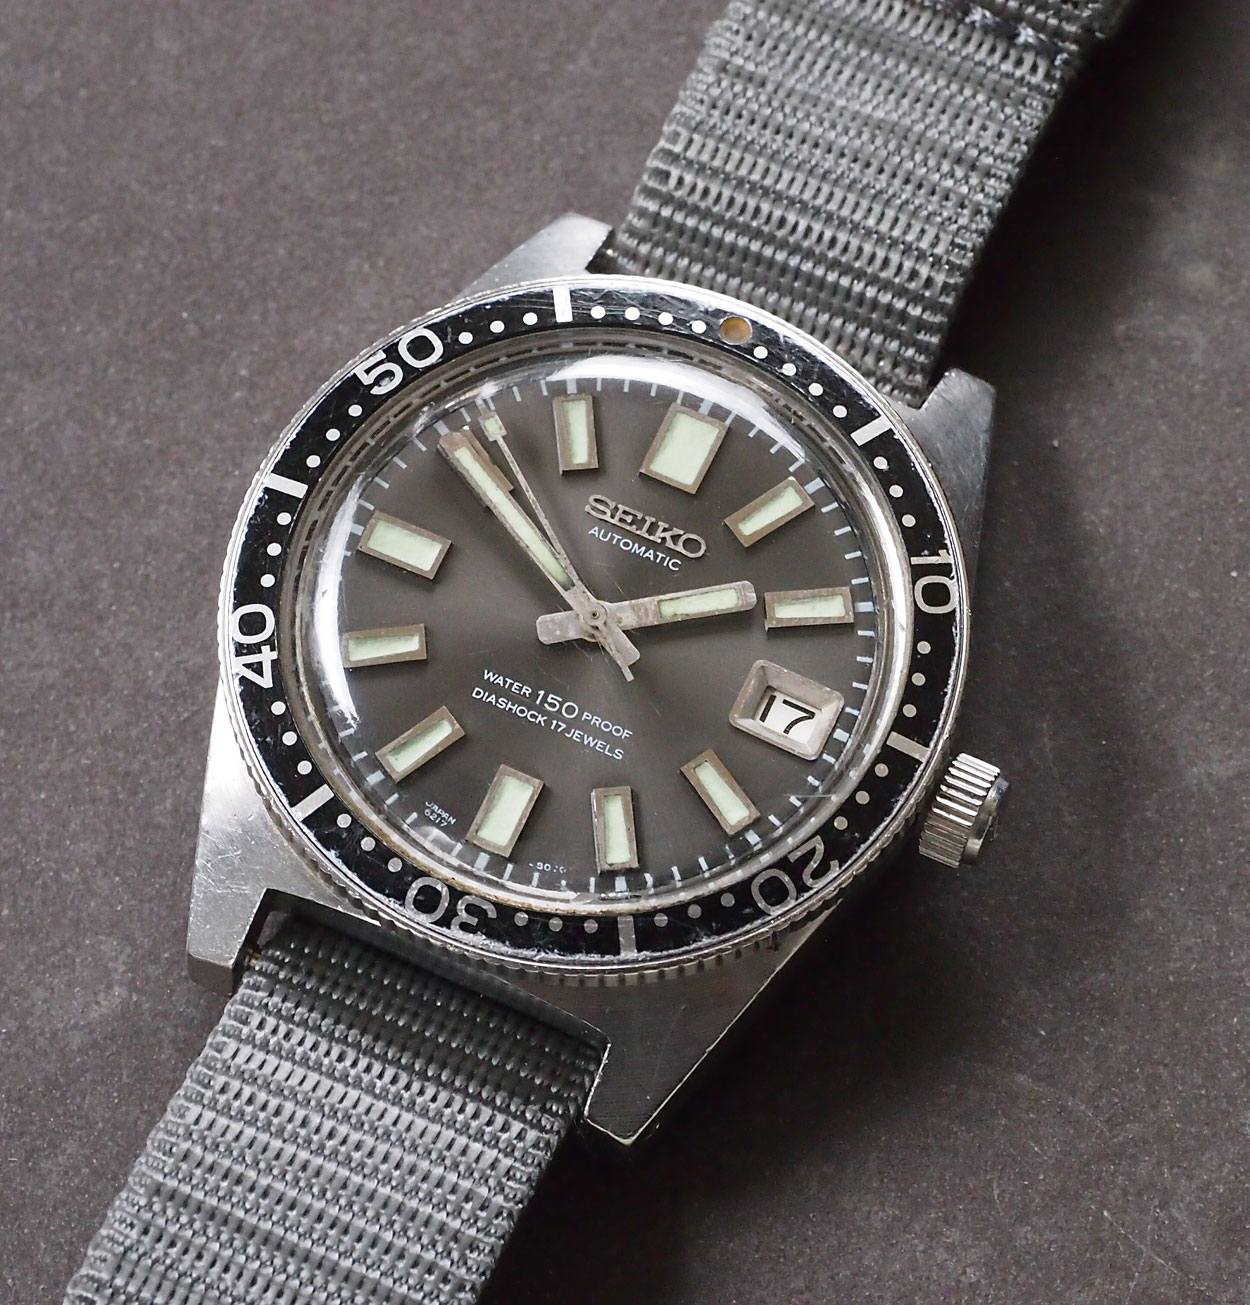 1965 Seiko 62MAS Diver, one of Mr. Hattori's favorite historic Seiko watches